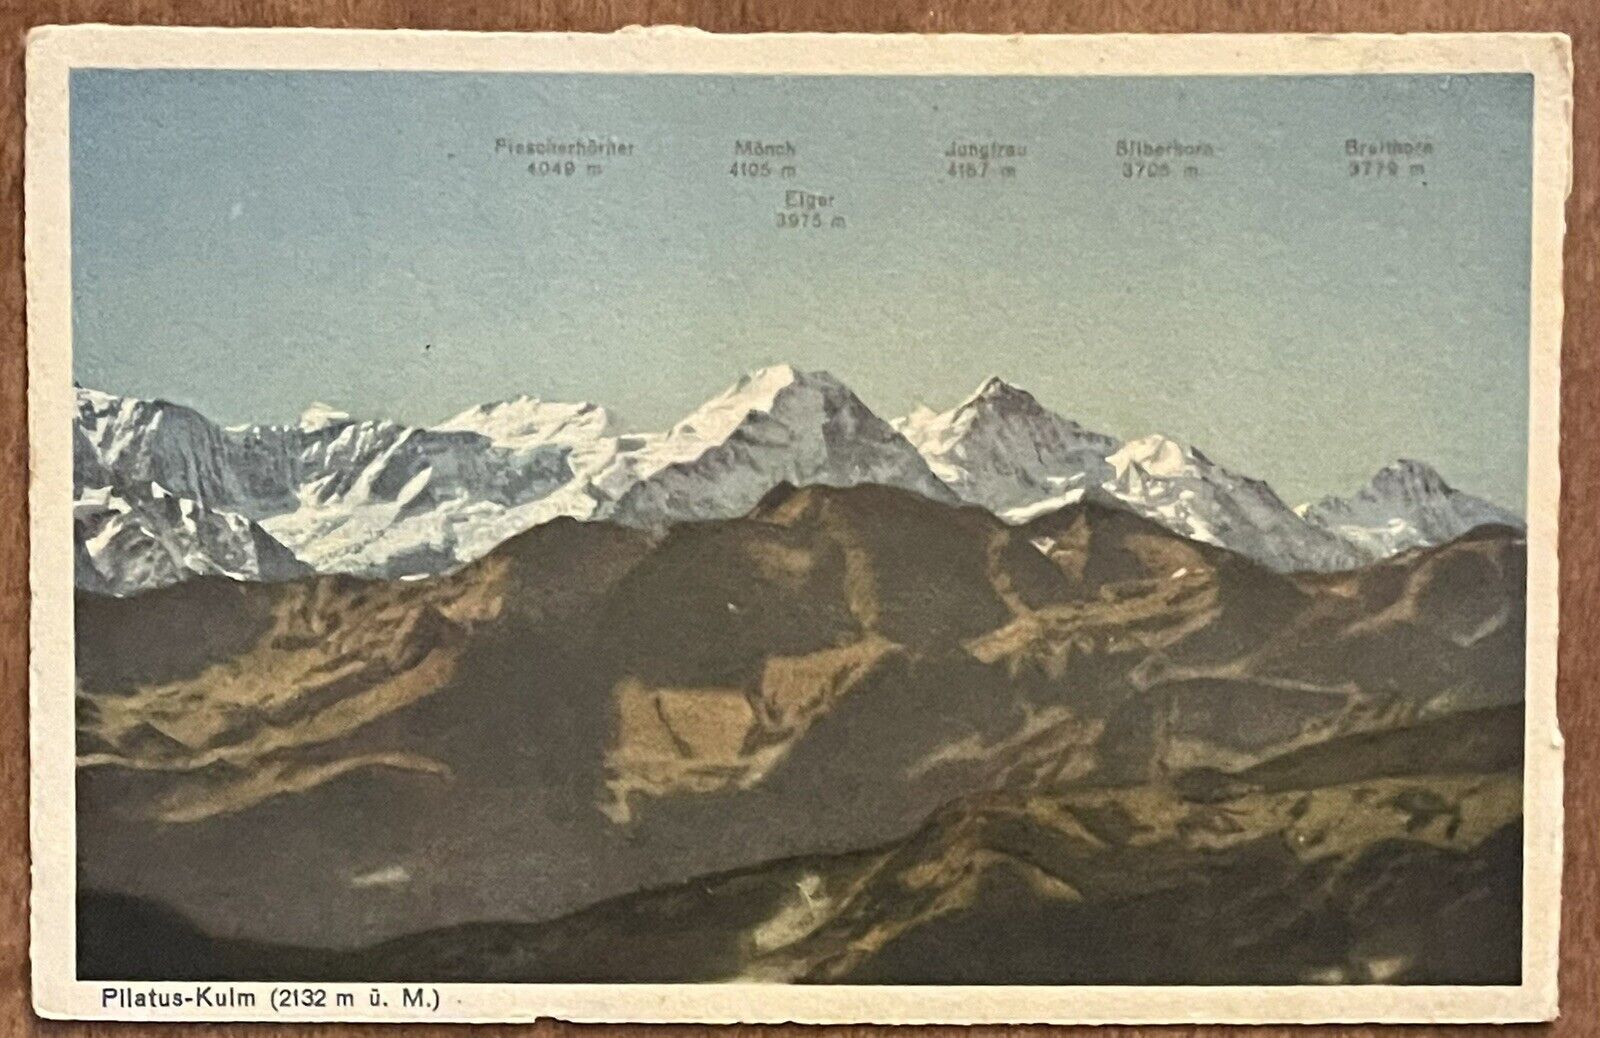 Pilatus Kulm Hotel - 2132 m Above Sea Level - Switzerland, Vintage Postcard